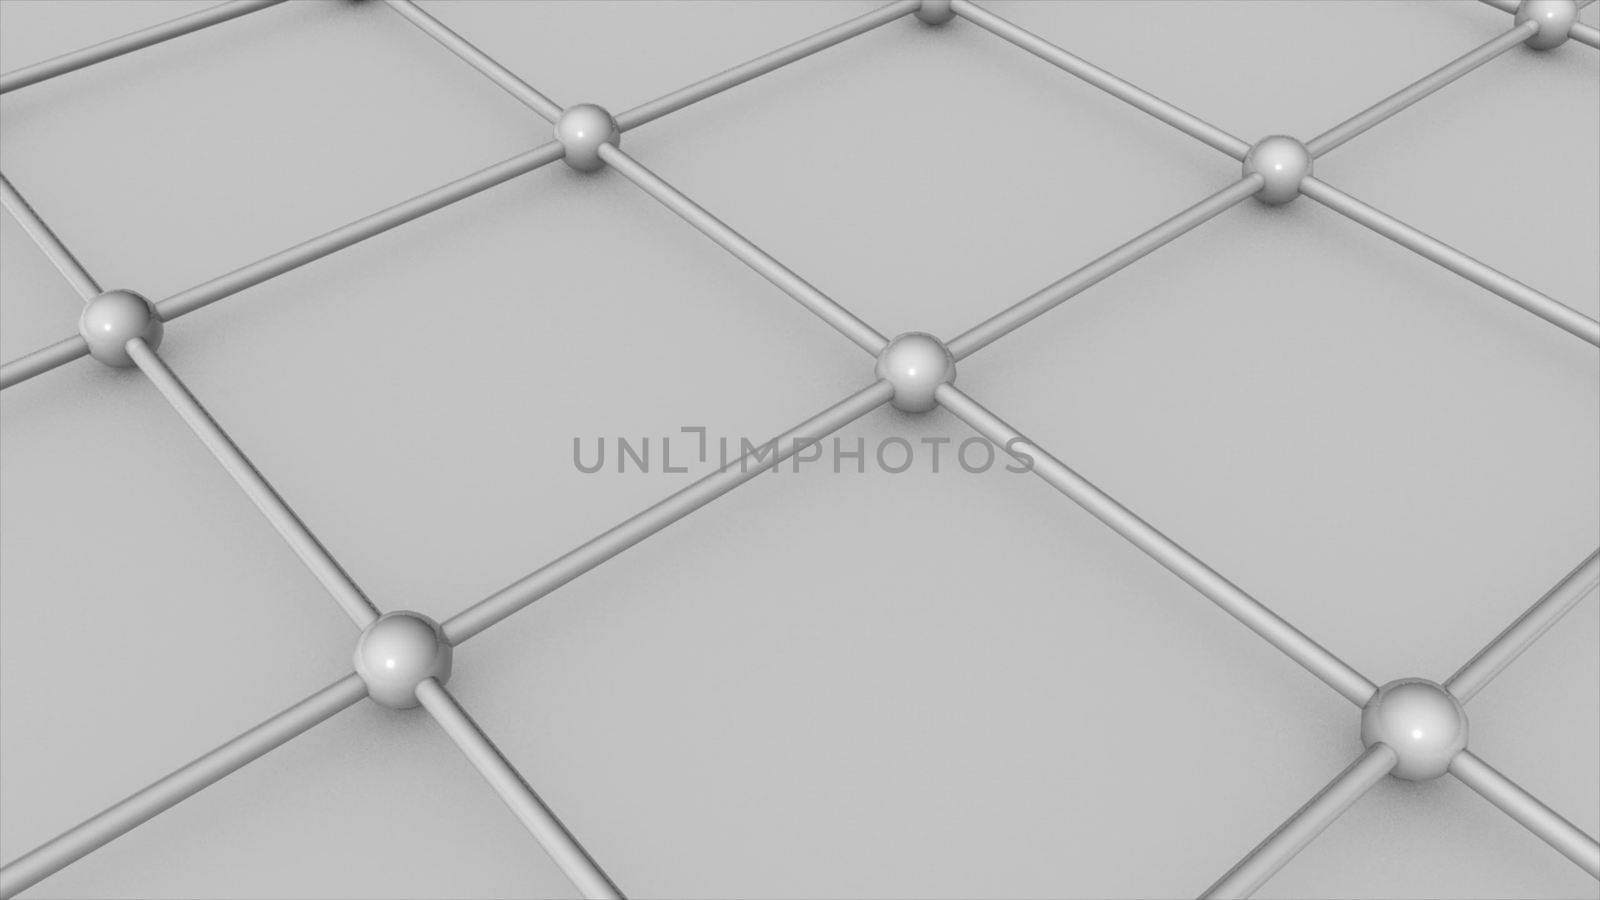 Abstract 3d render Molecular floor. Technology background